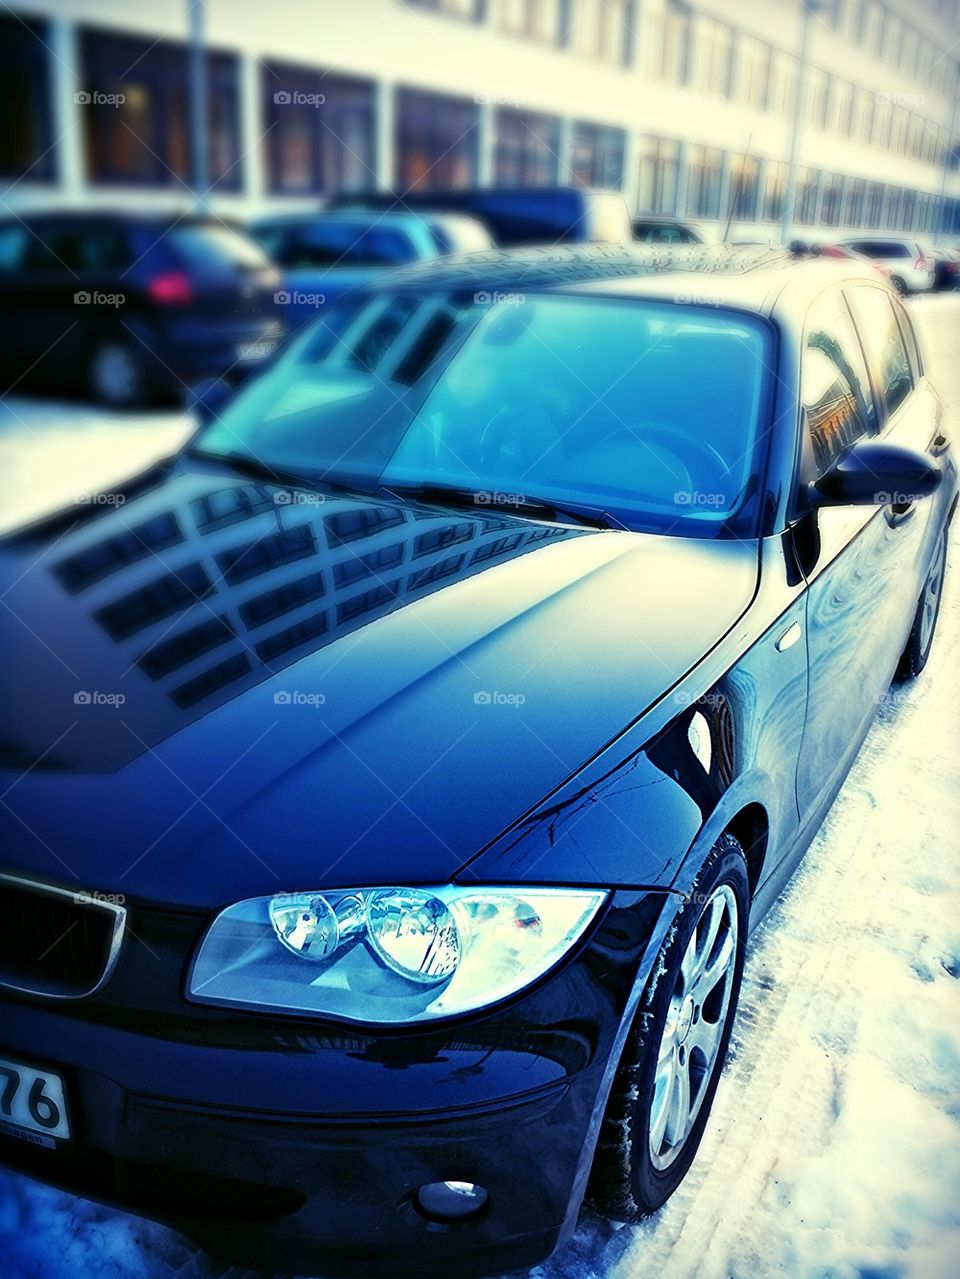 BMWinter